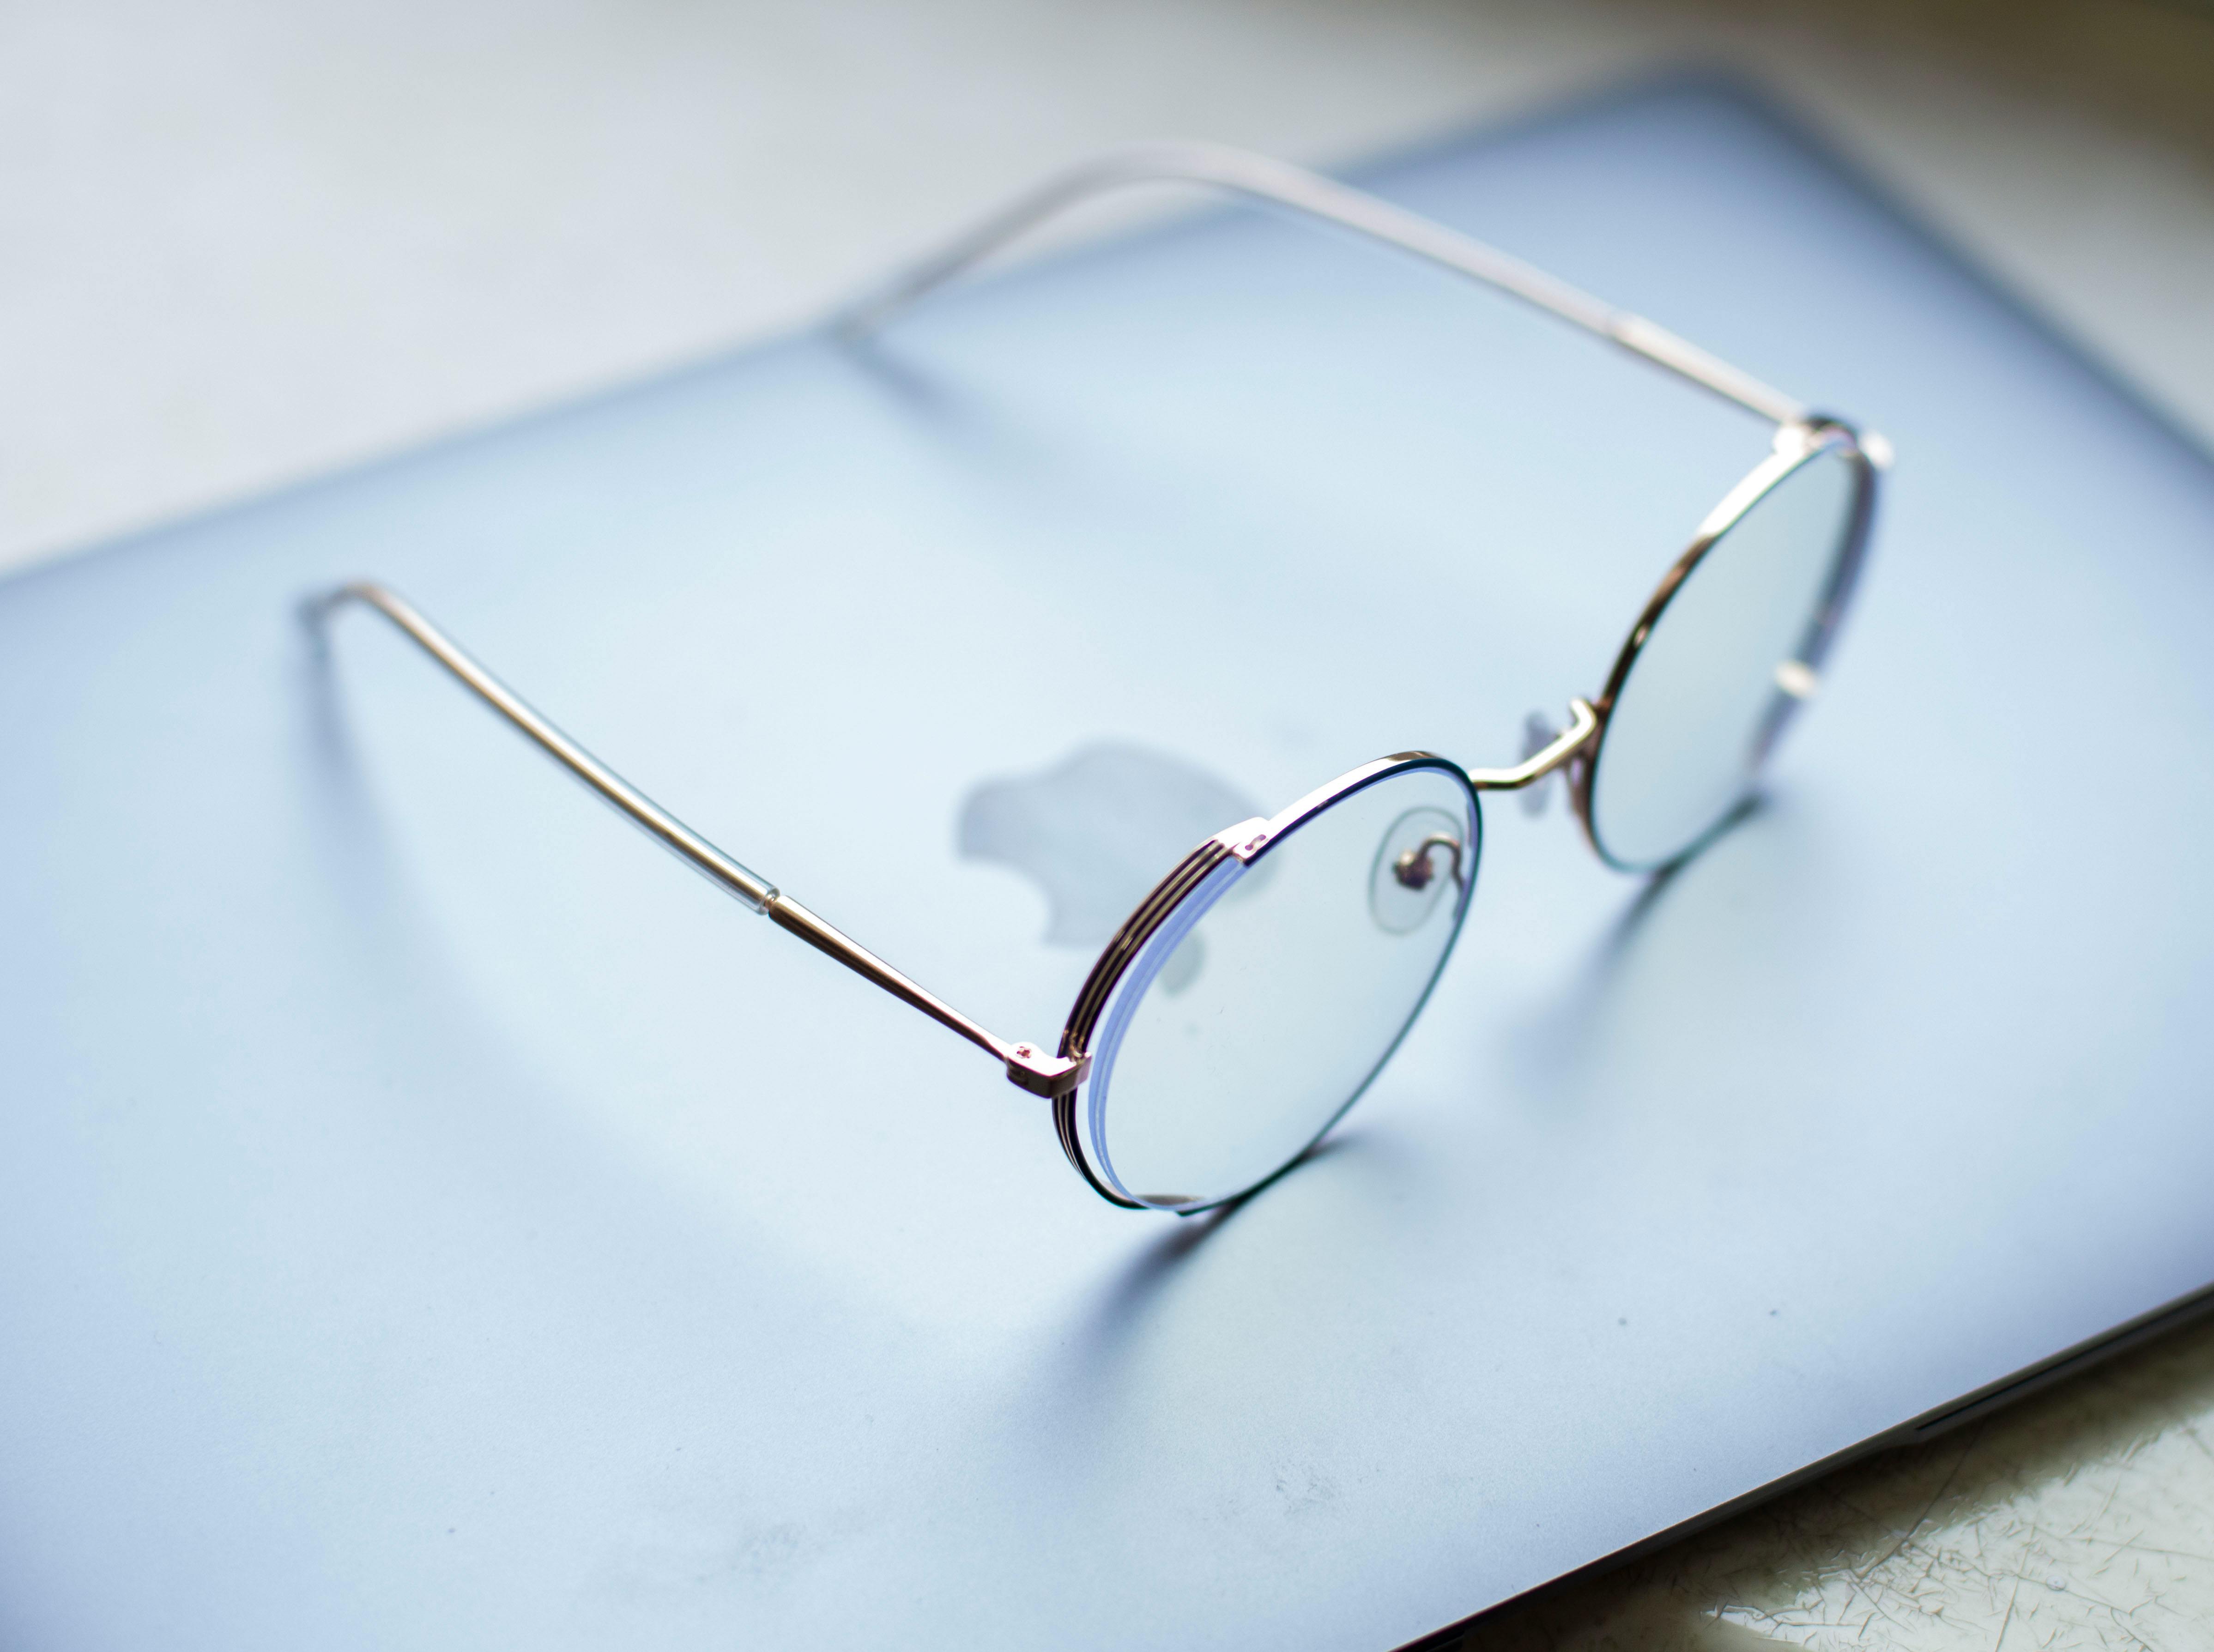 Close-Up Shot of Eyeglasses on a Laptop · Free Stock Photo